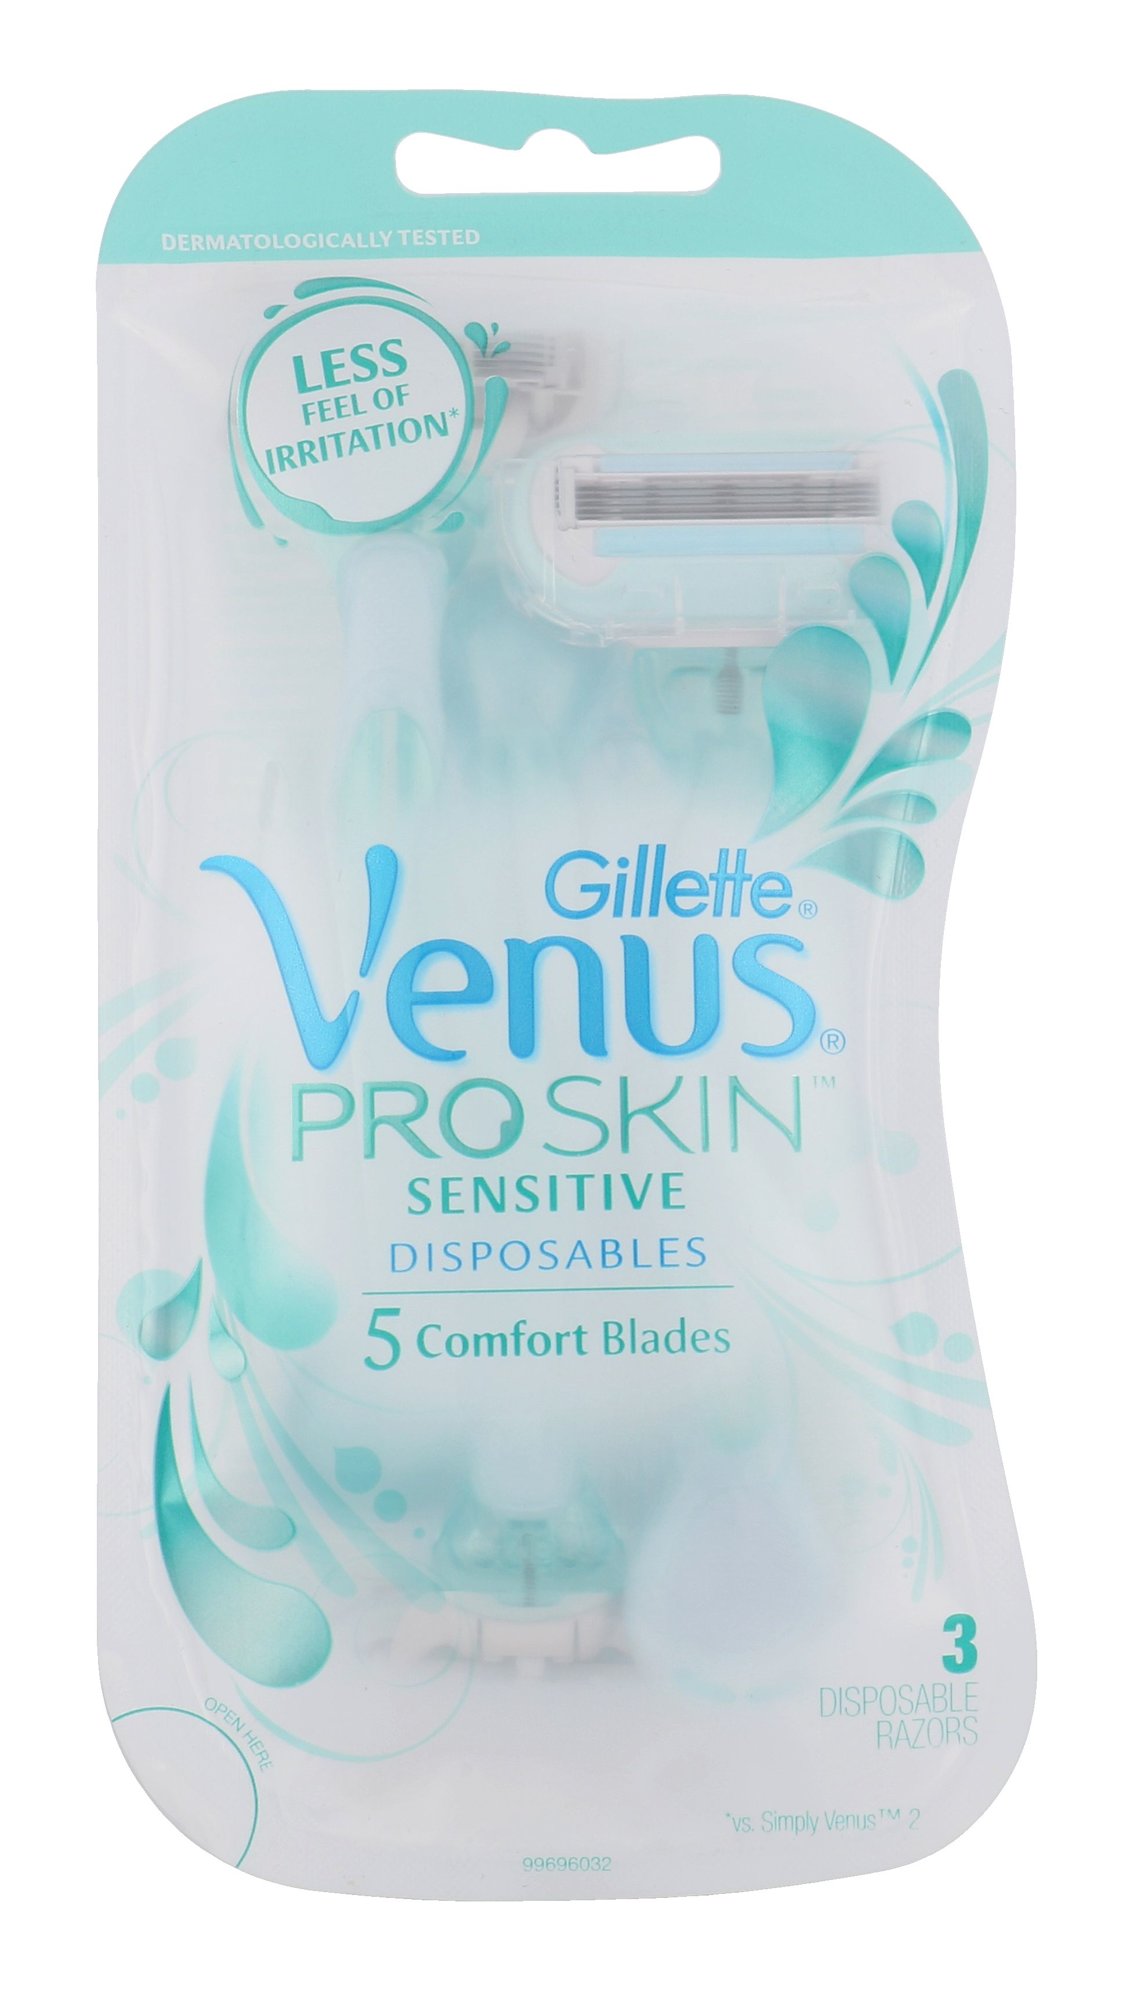 Gillette Venus ProSkin Sensitive skustuvas